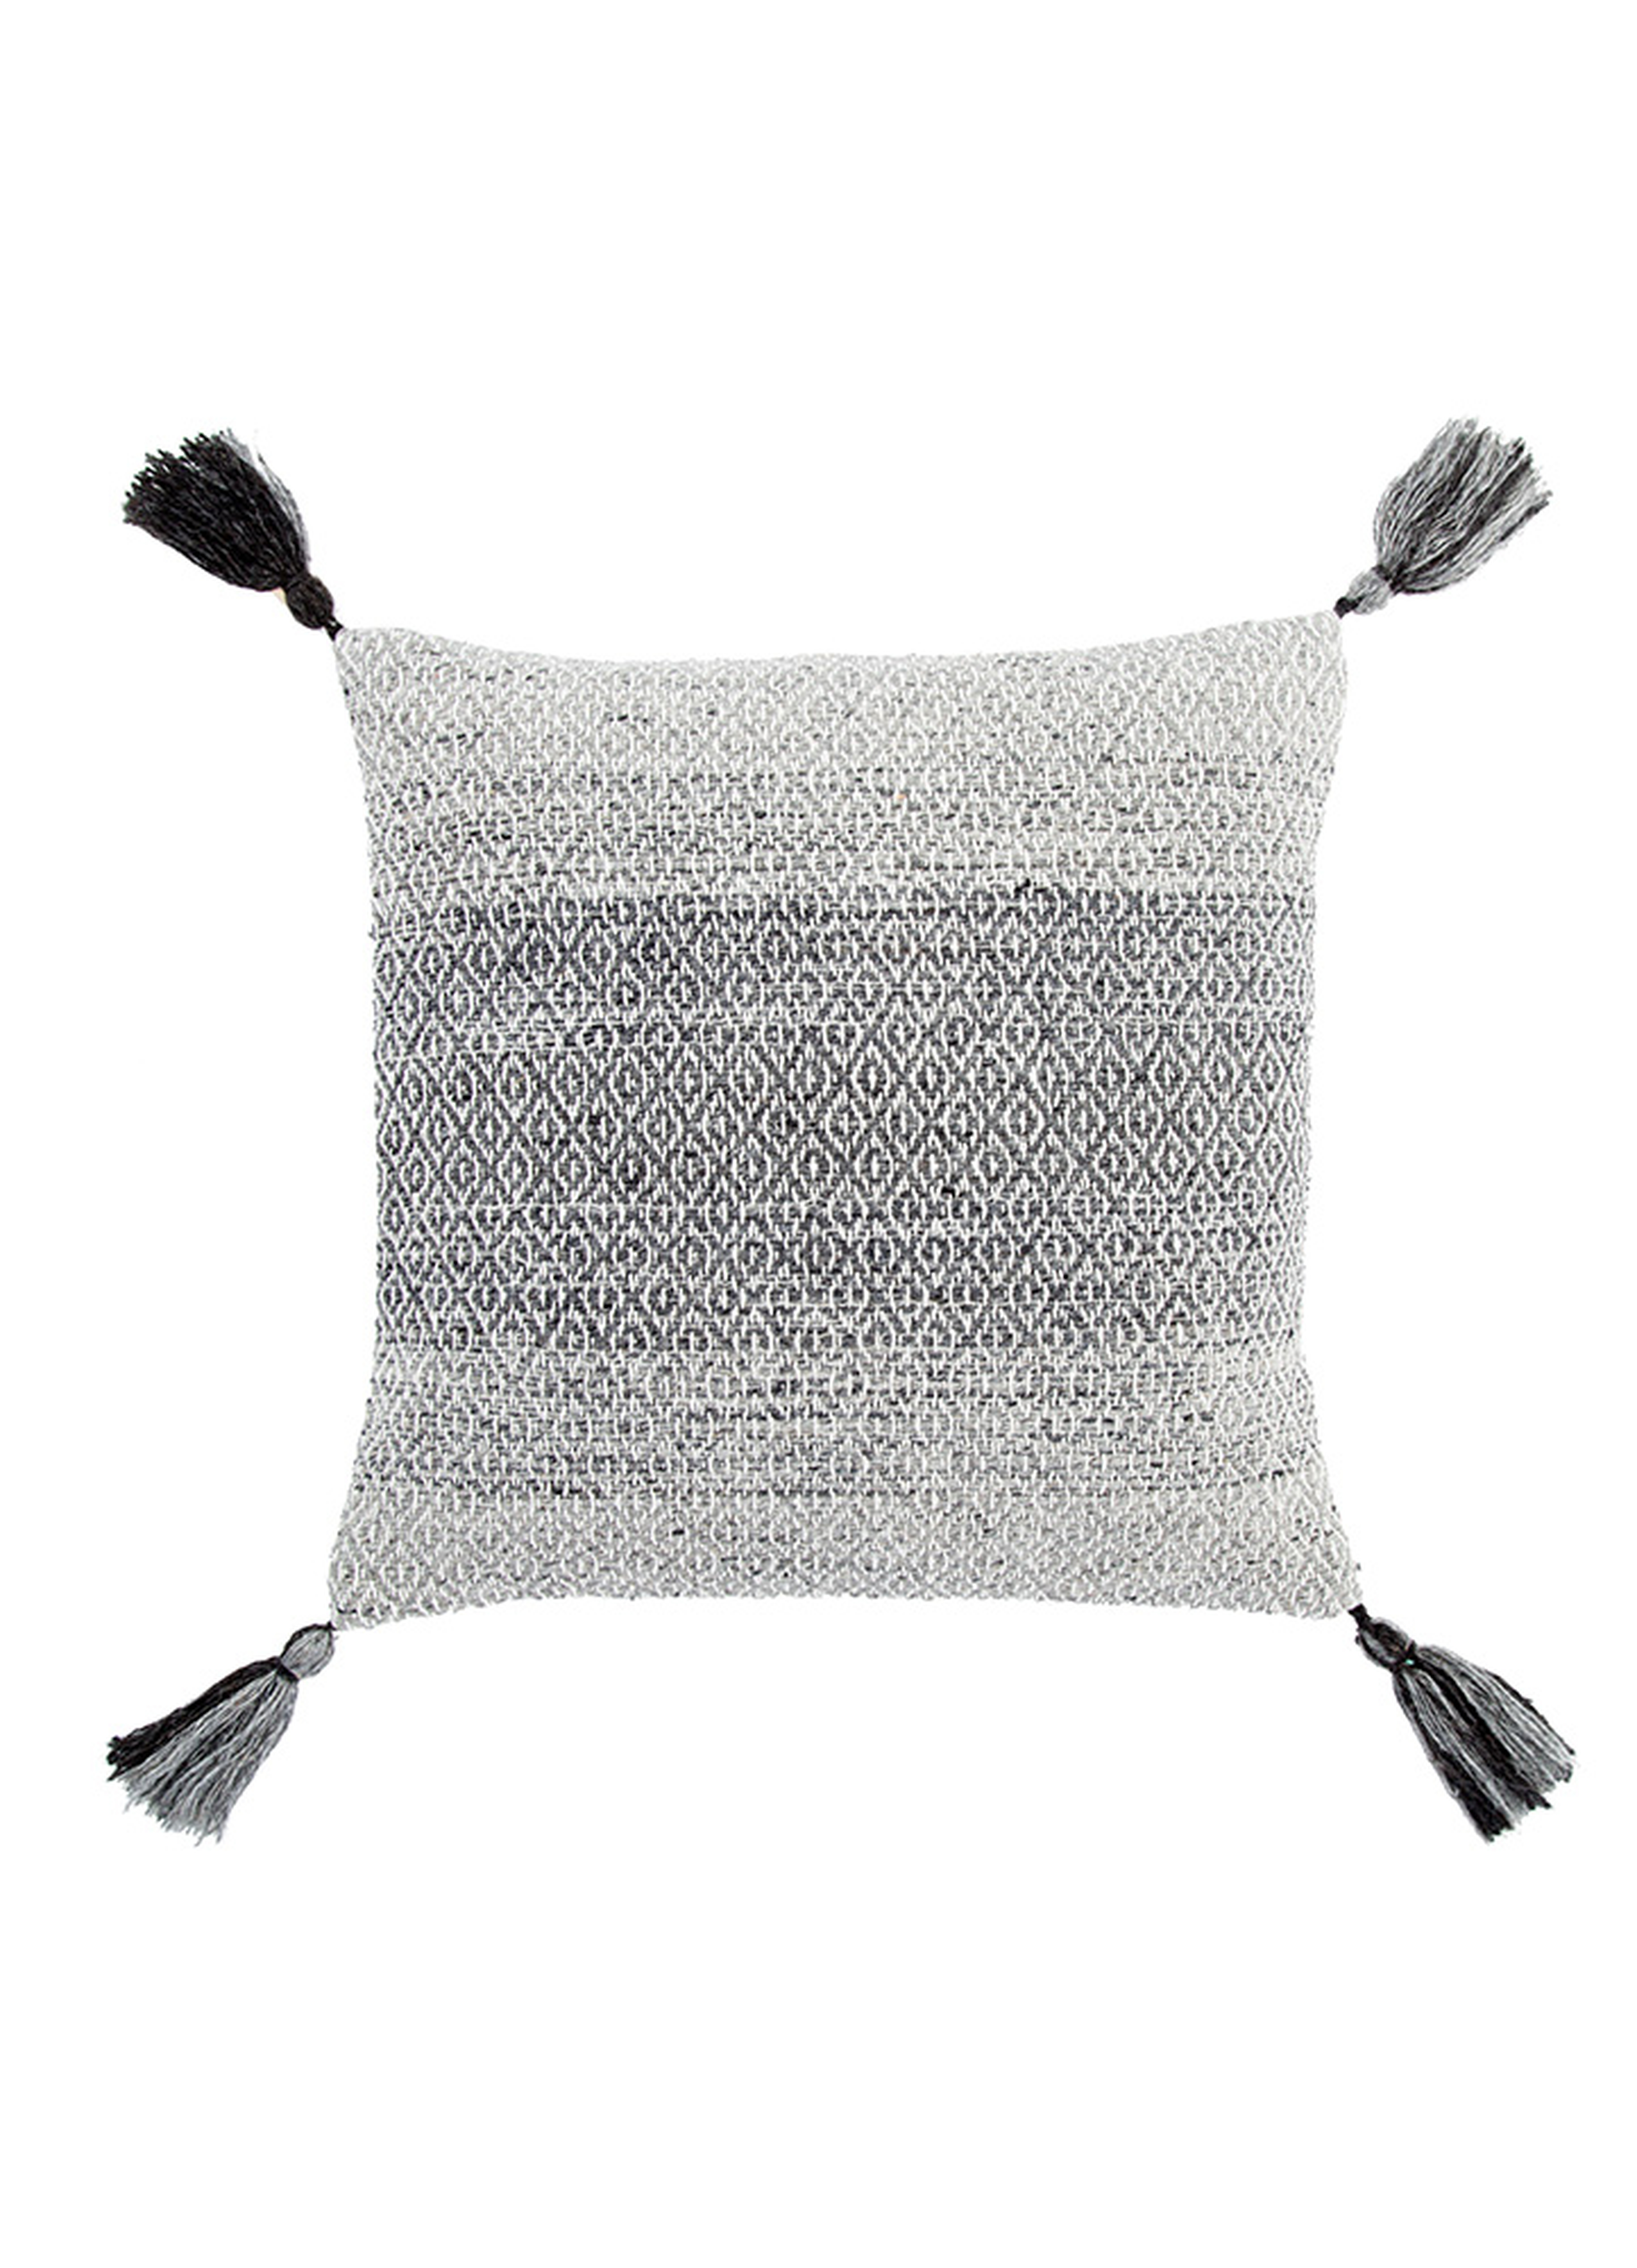 PEY11 - Peykan pillow 18x18 - Collective Weavers